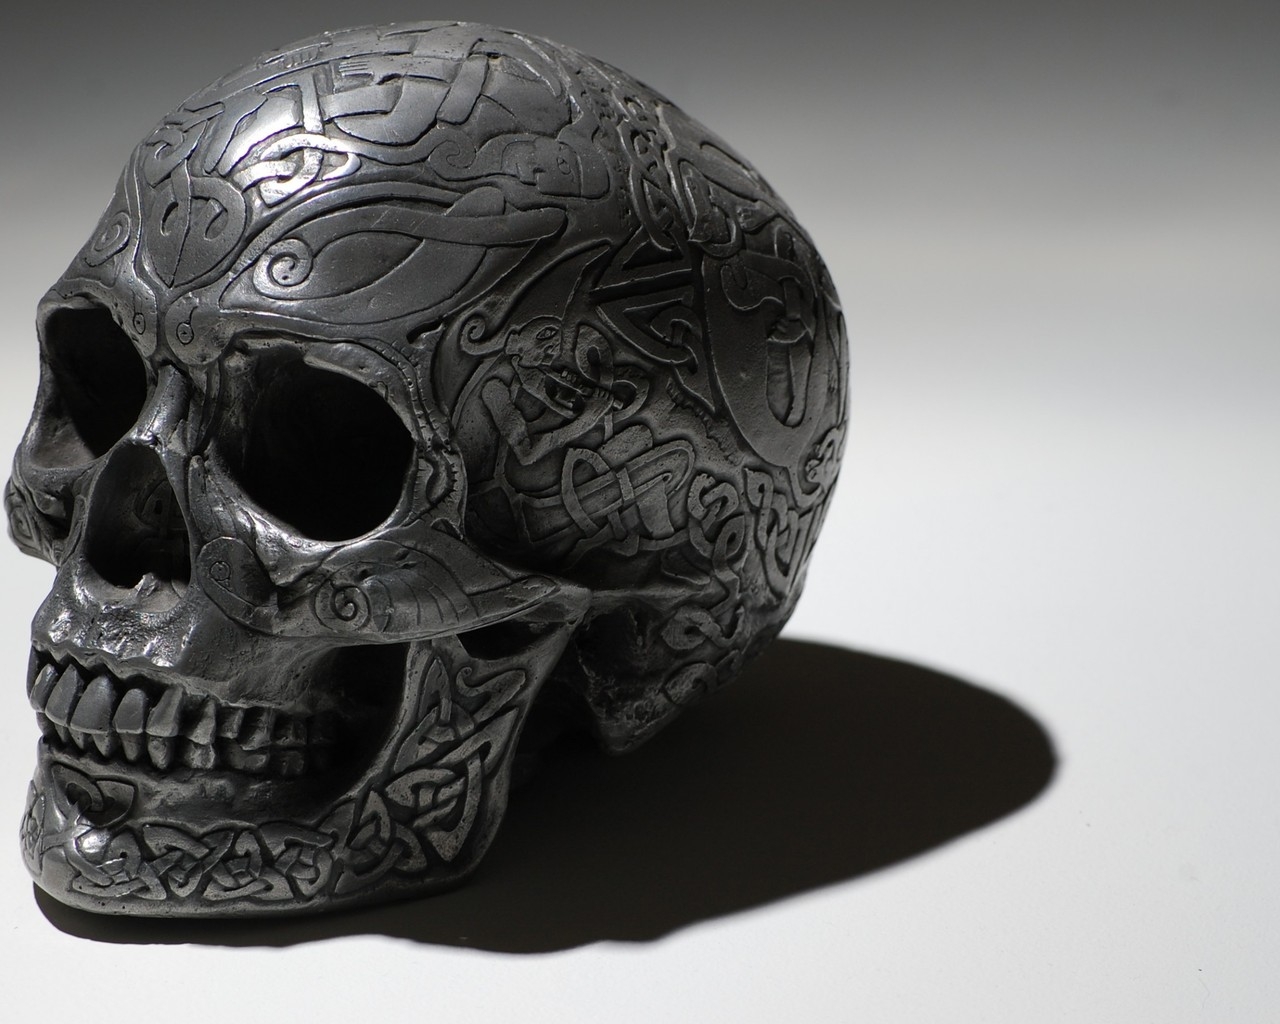 Metal Skull for 1280 x 1024 resolution